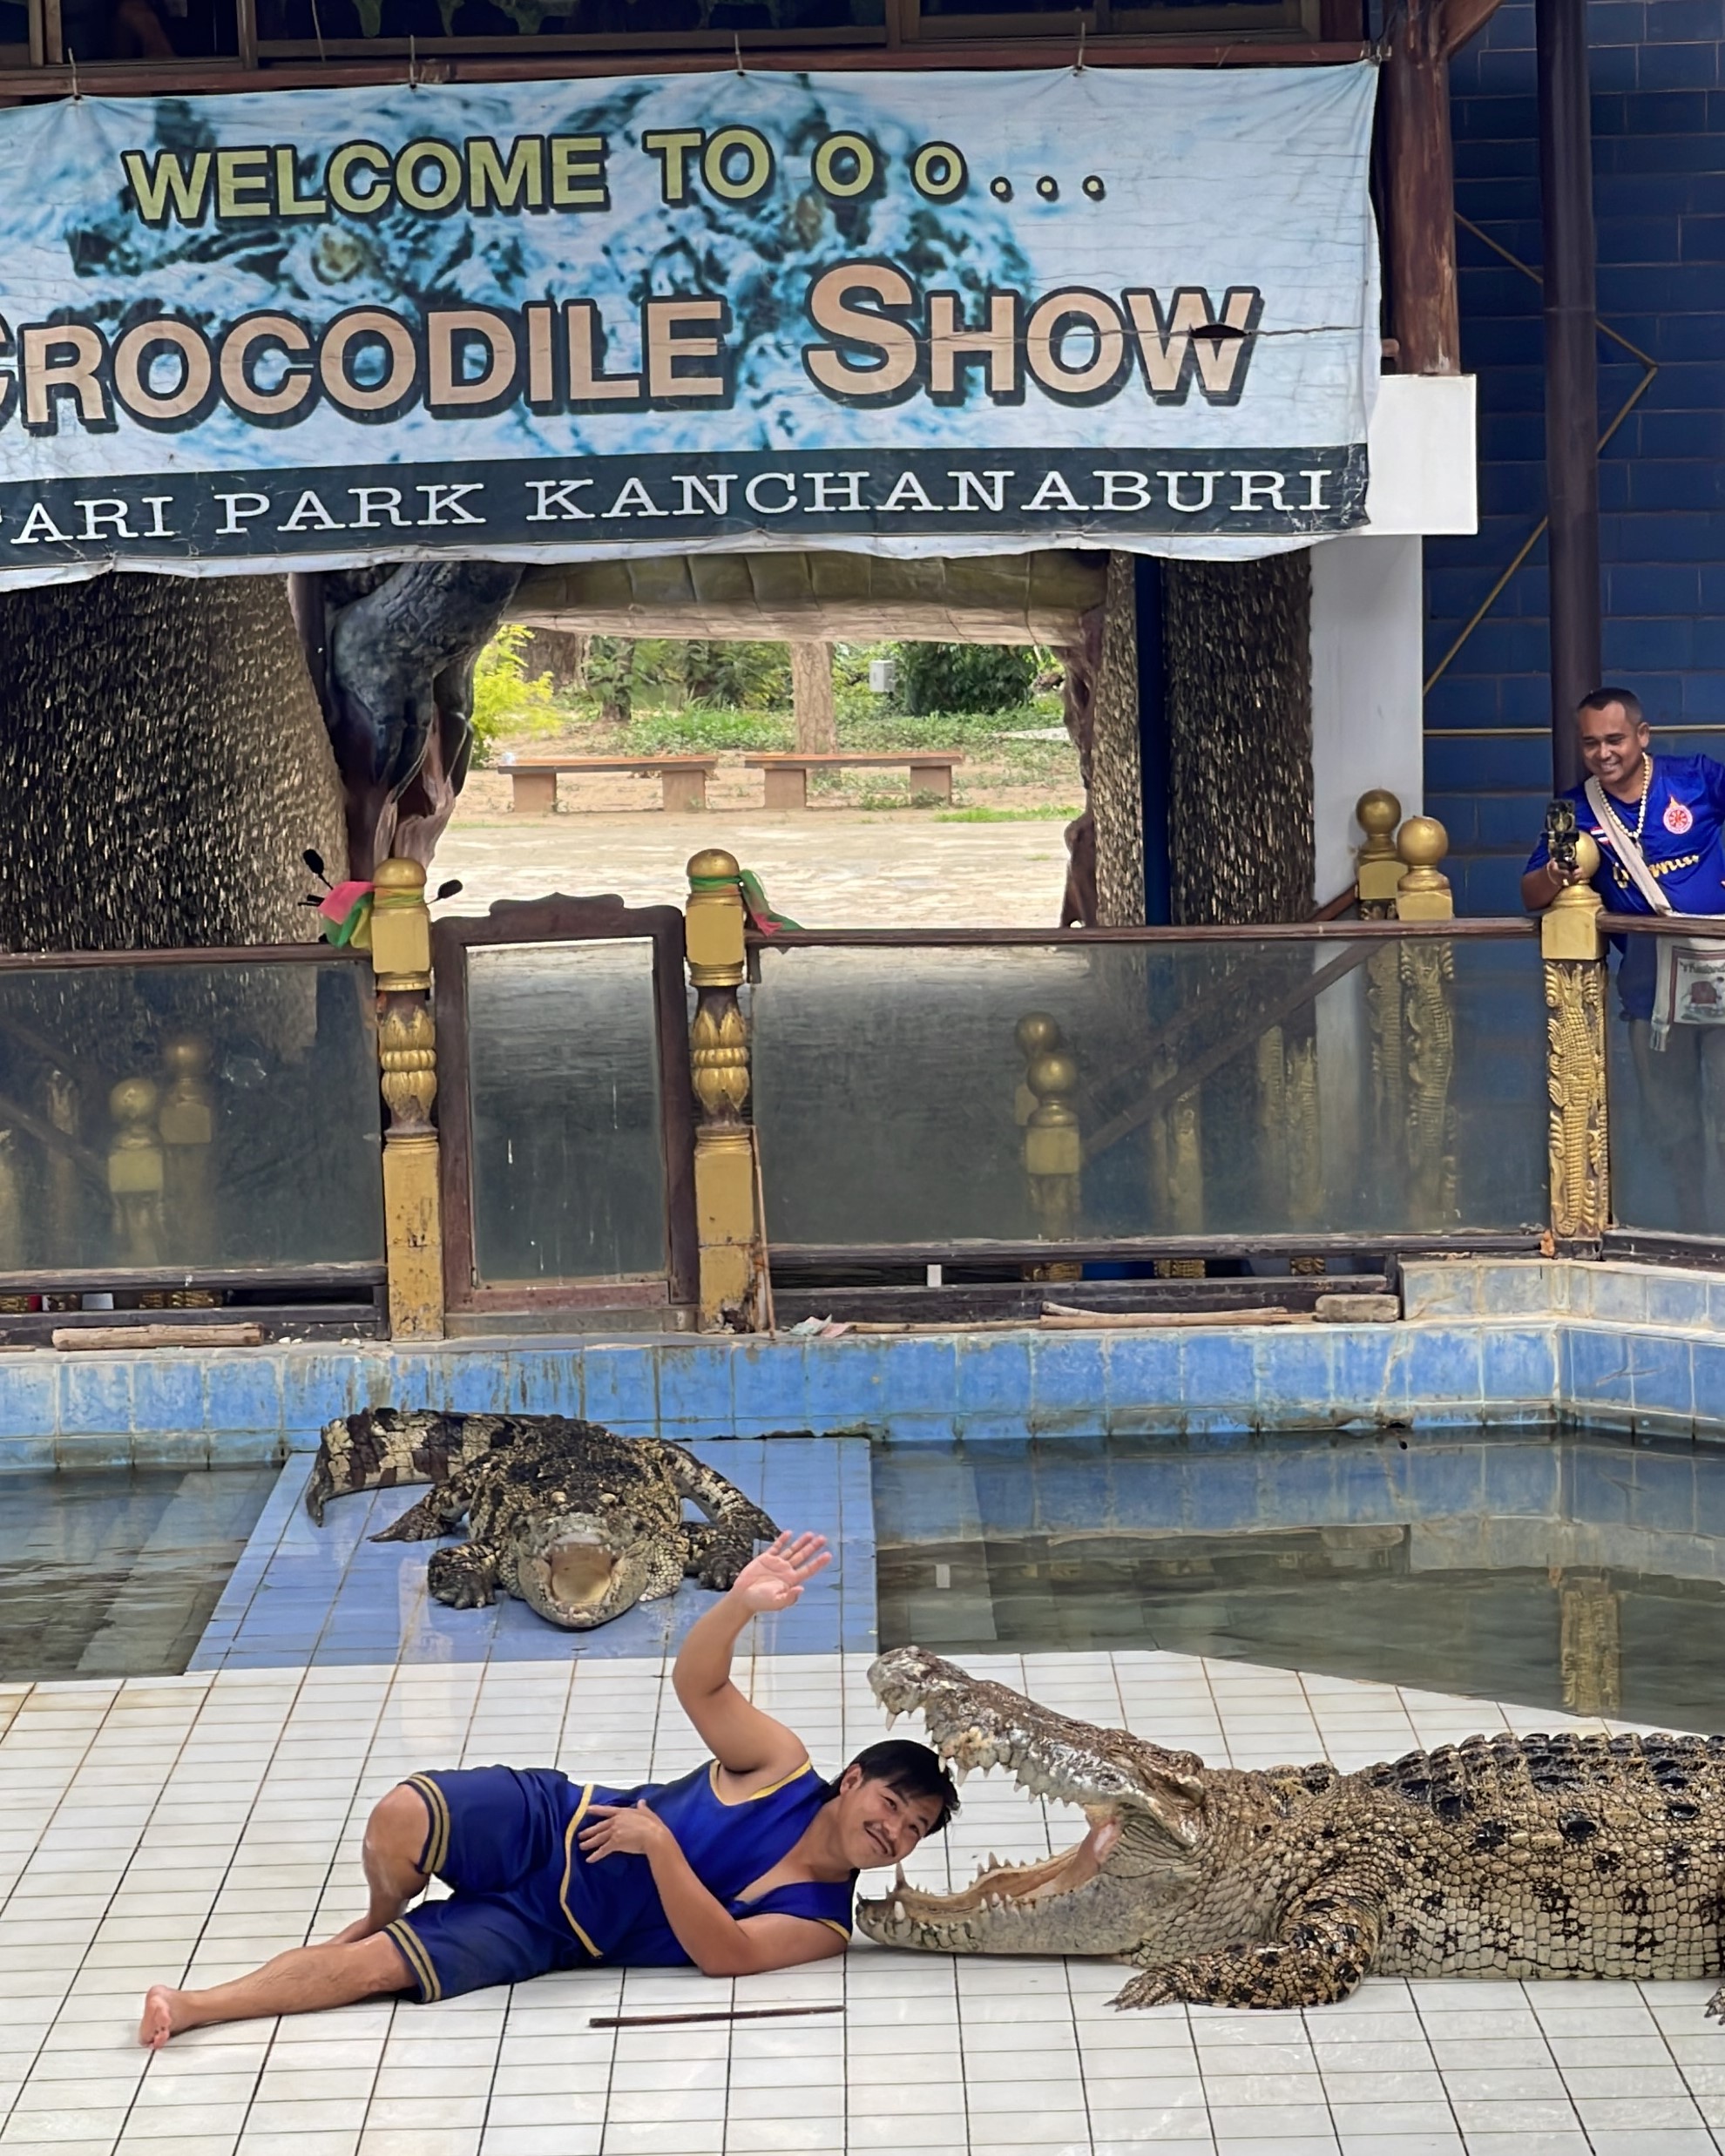 Safari Park Kanchanaburi 北碧府野生動物園鱷魚表演